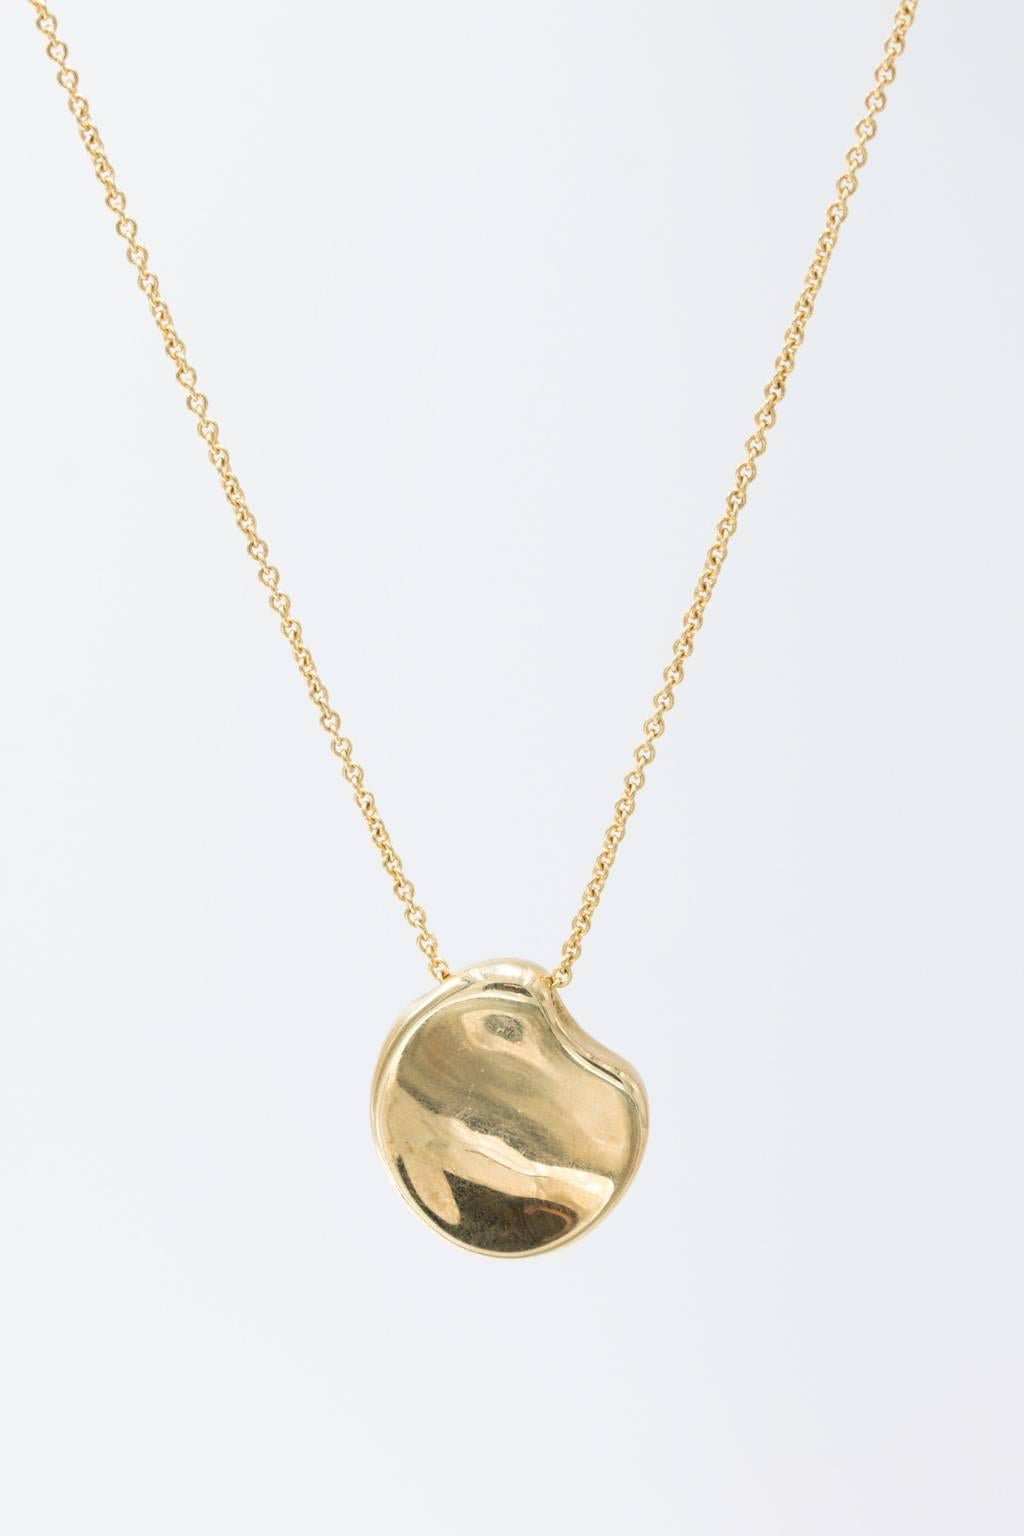 cat island isle shell pendant